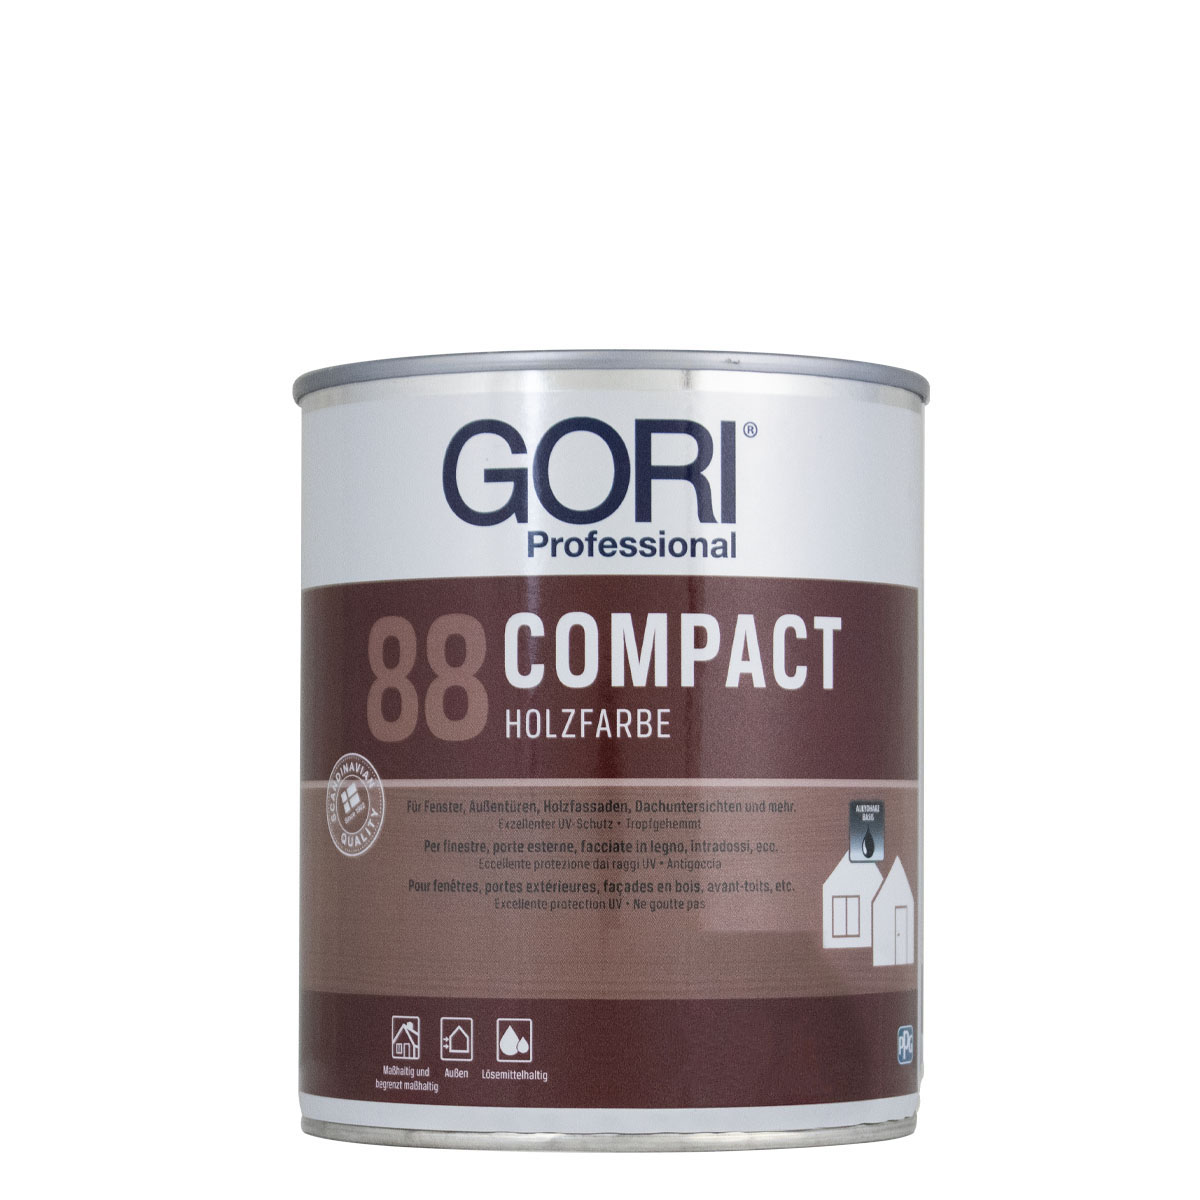 Gori_88_compact_Holzfarbe_750ml_gross